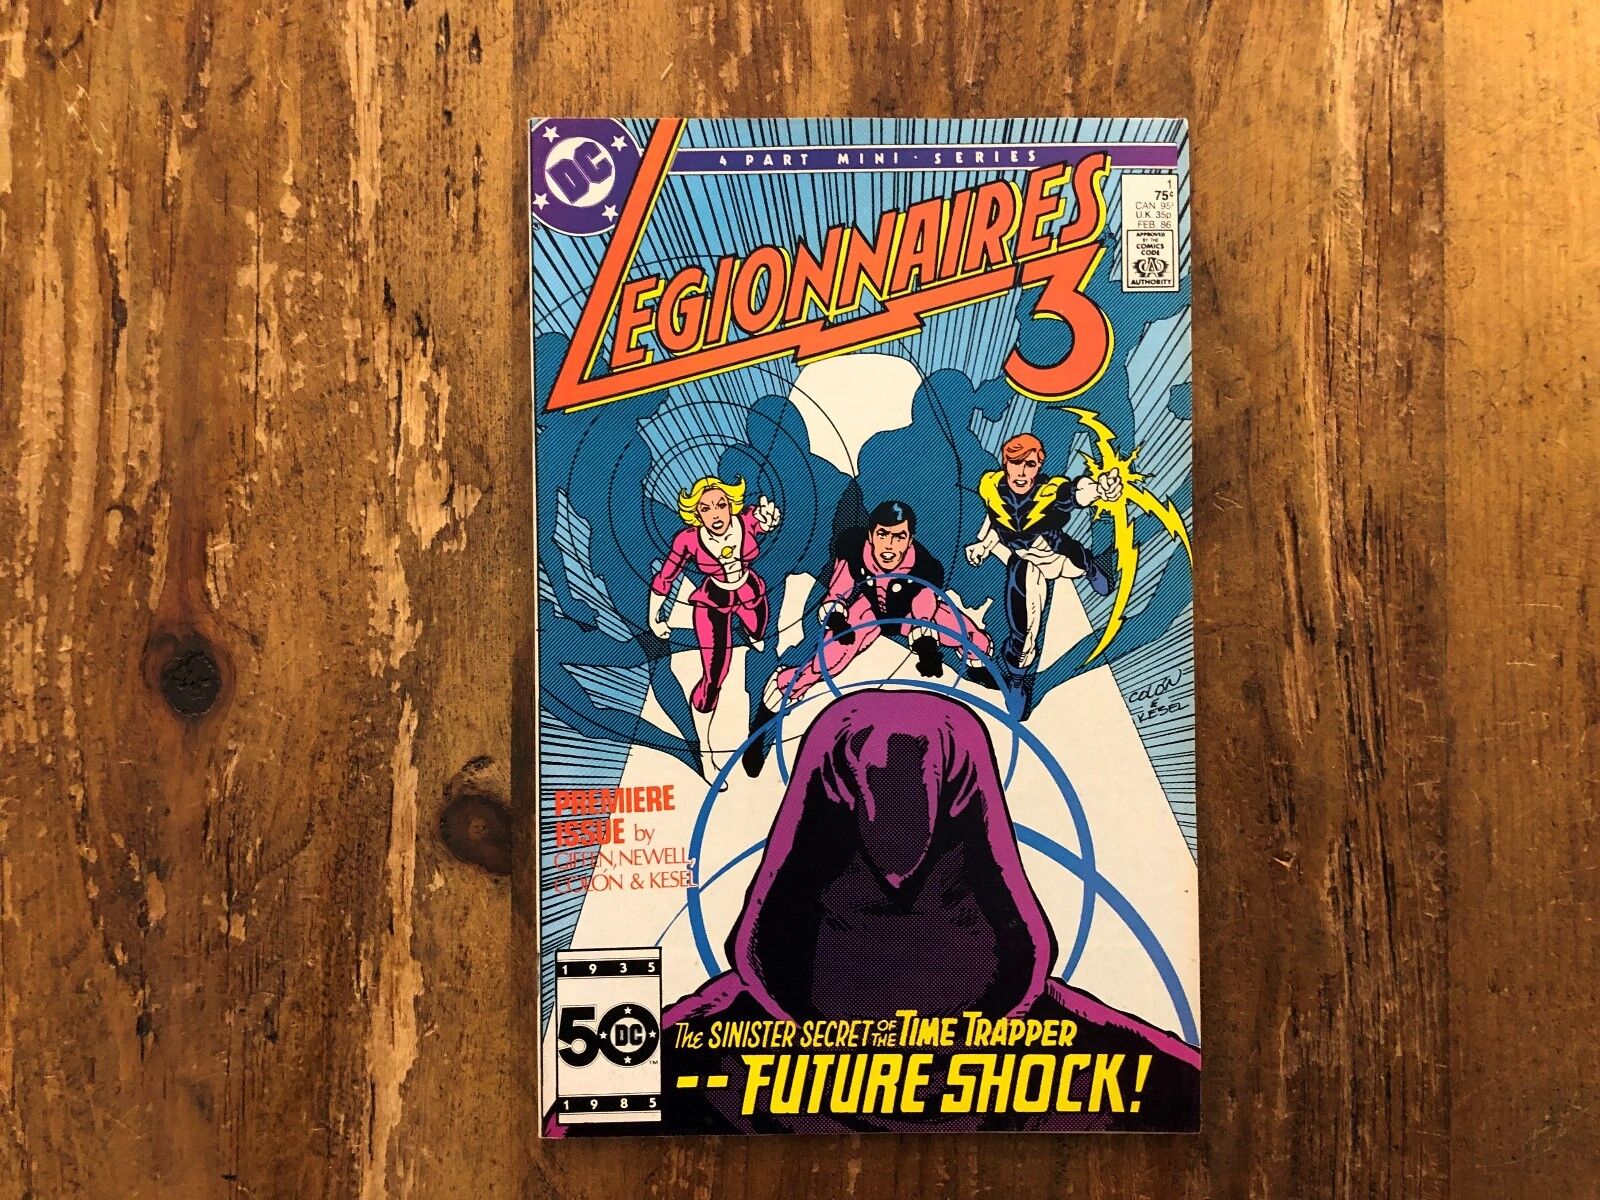 Legionnaires 3 #1  DC Comics 1986  Unrestored COMBINE SHIPPING 